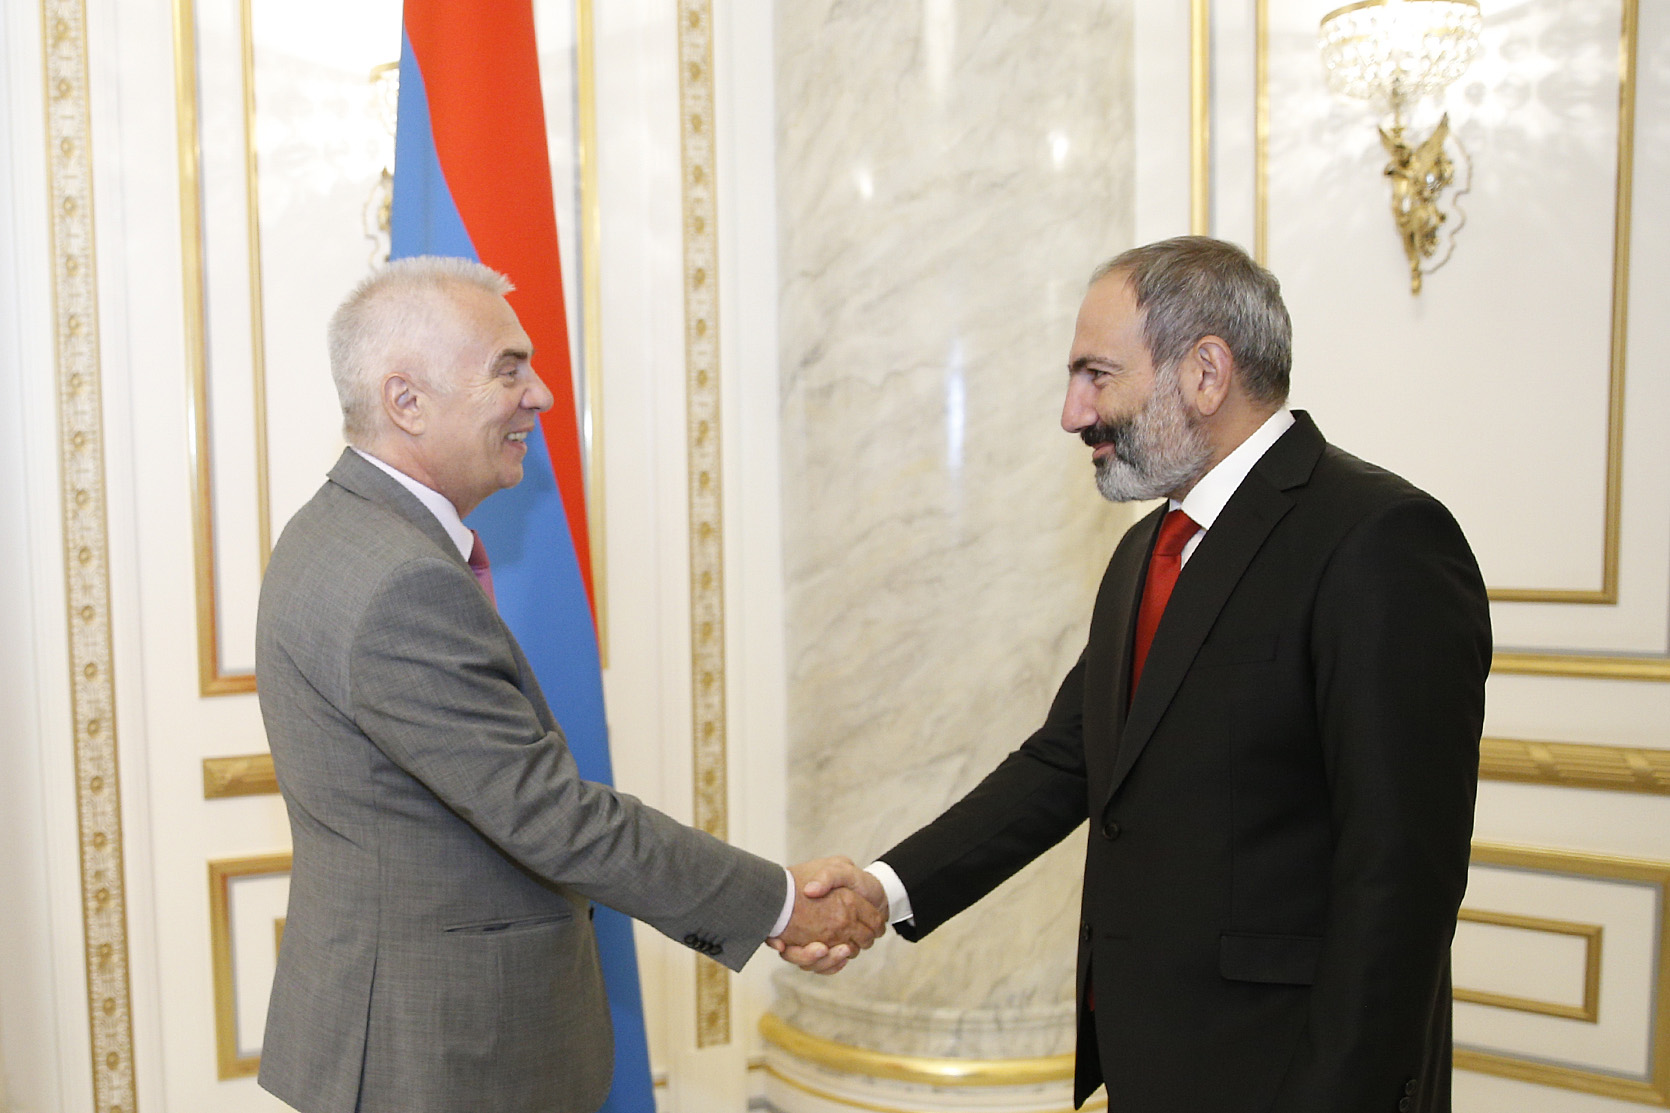 Nikol Pashinyan, Piotr Świtalski discuss EU-Armenia relations